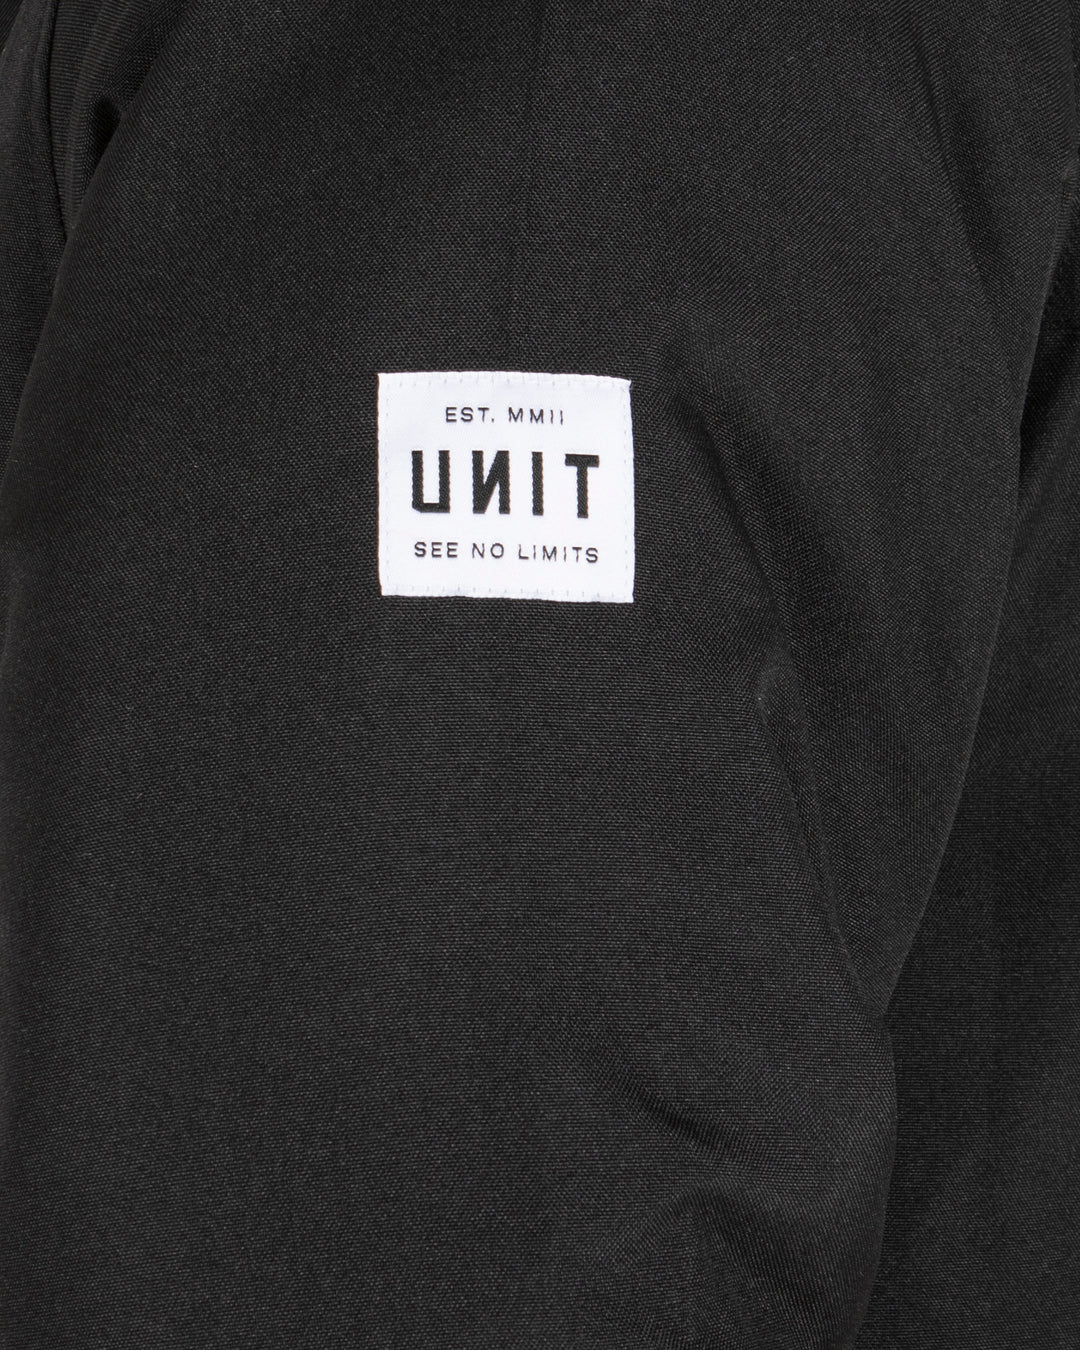 UNIT Mens Eternal Weather Resistant Jacket